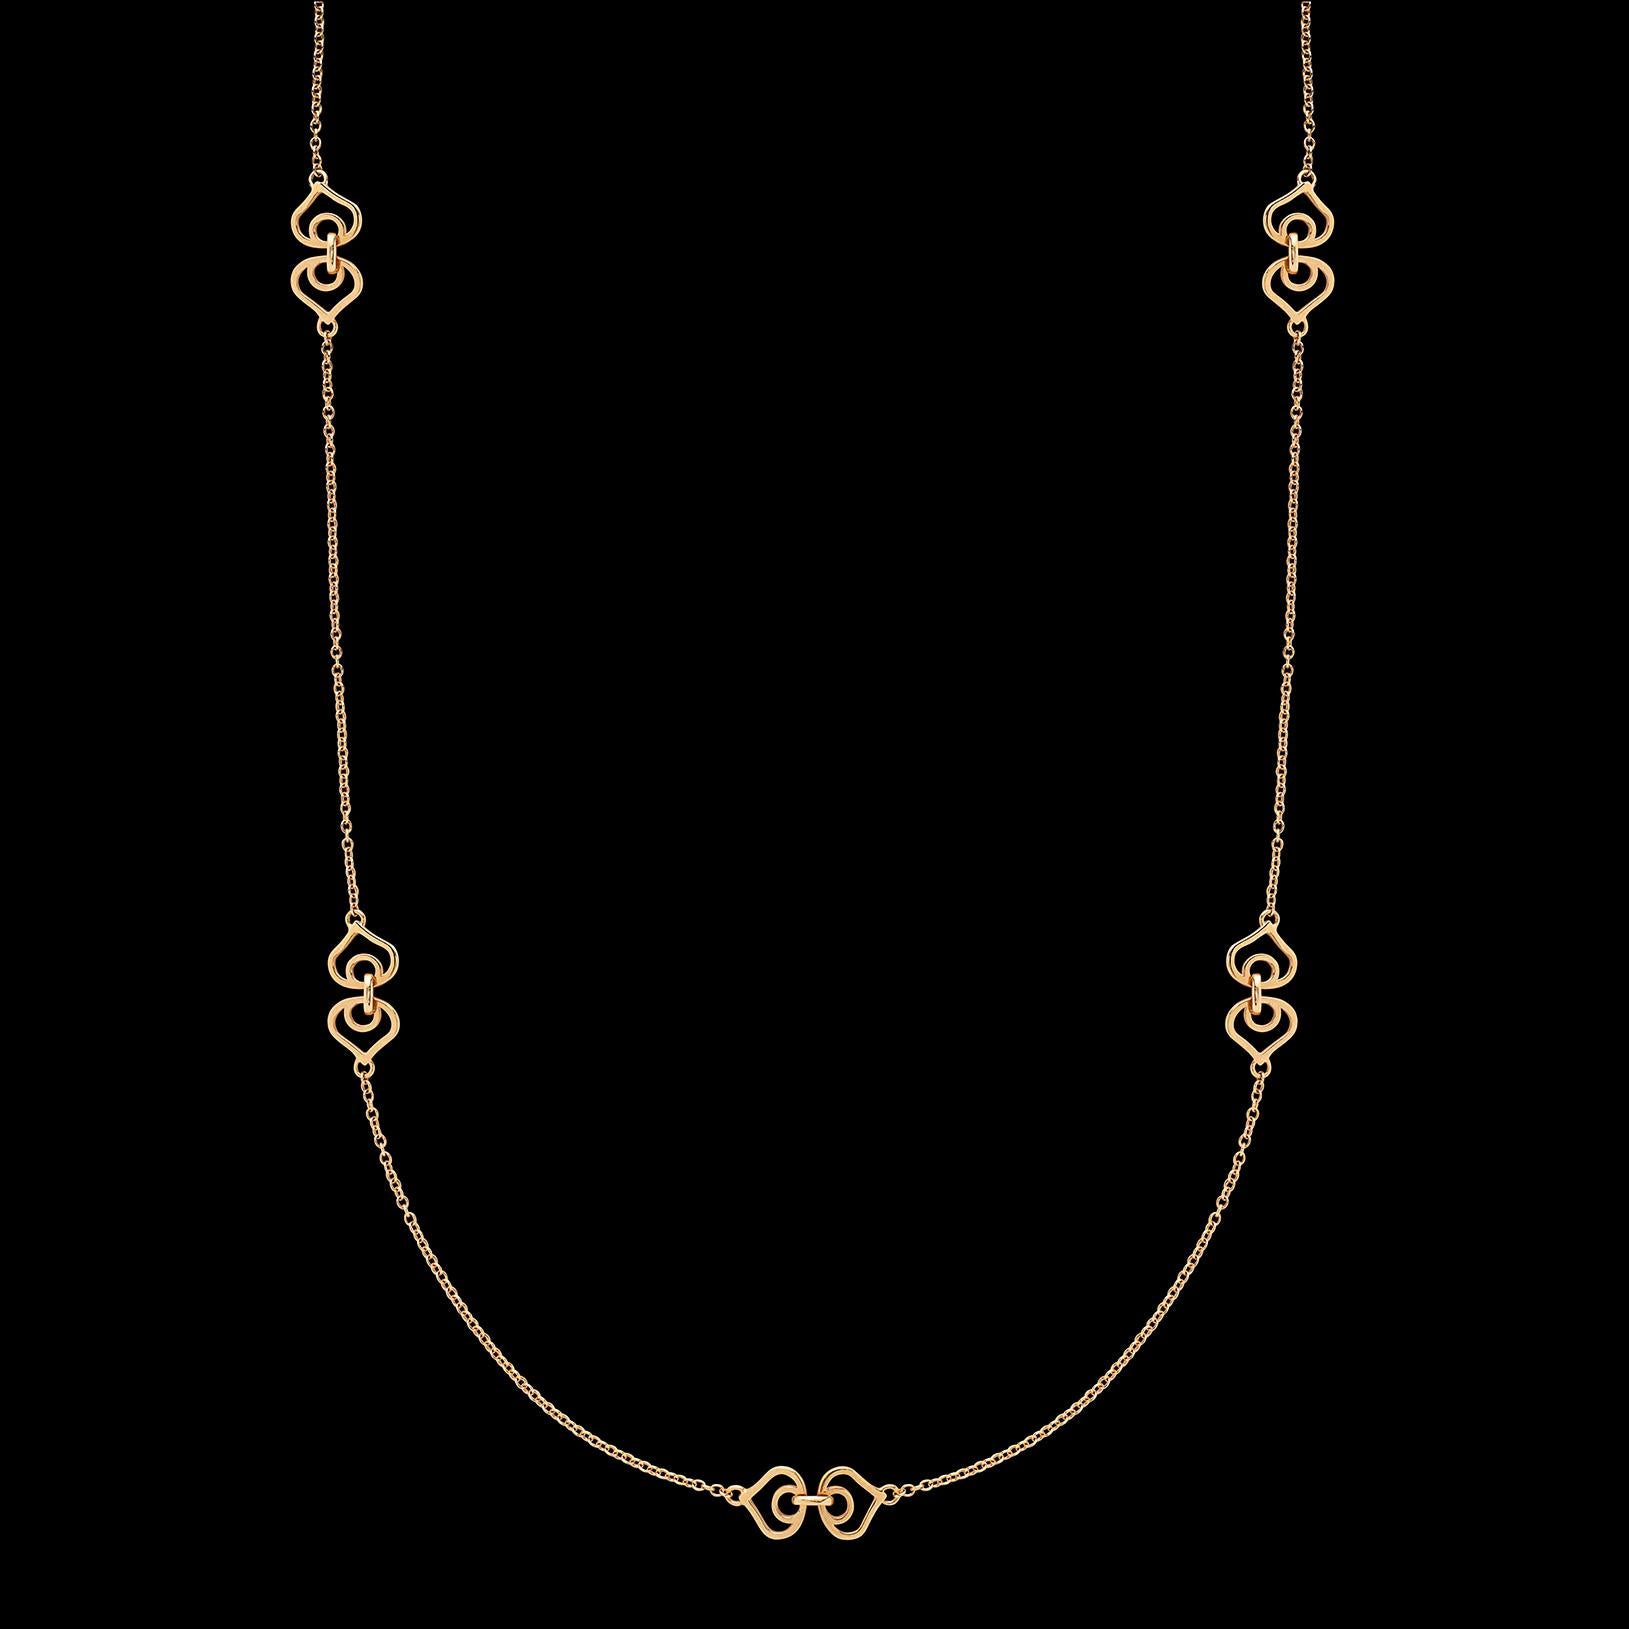 Women's 18 Karat Gold Station Necklace by Marina B.